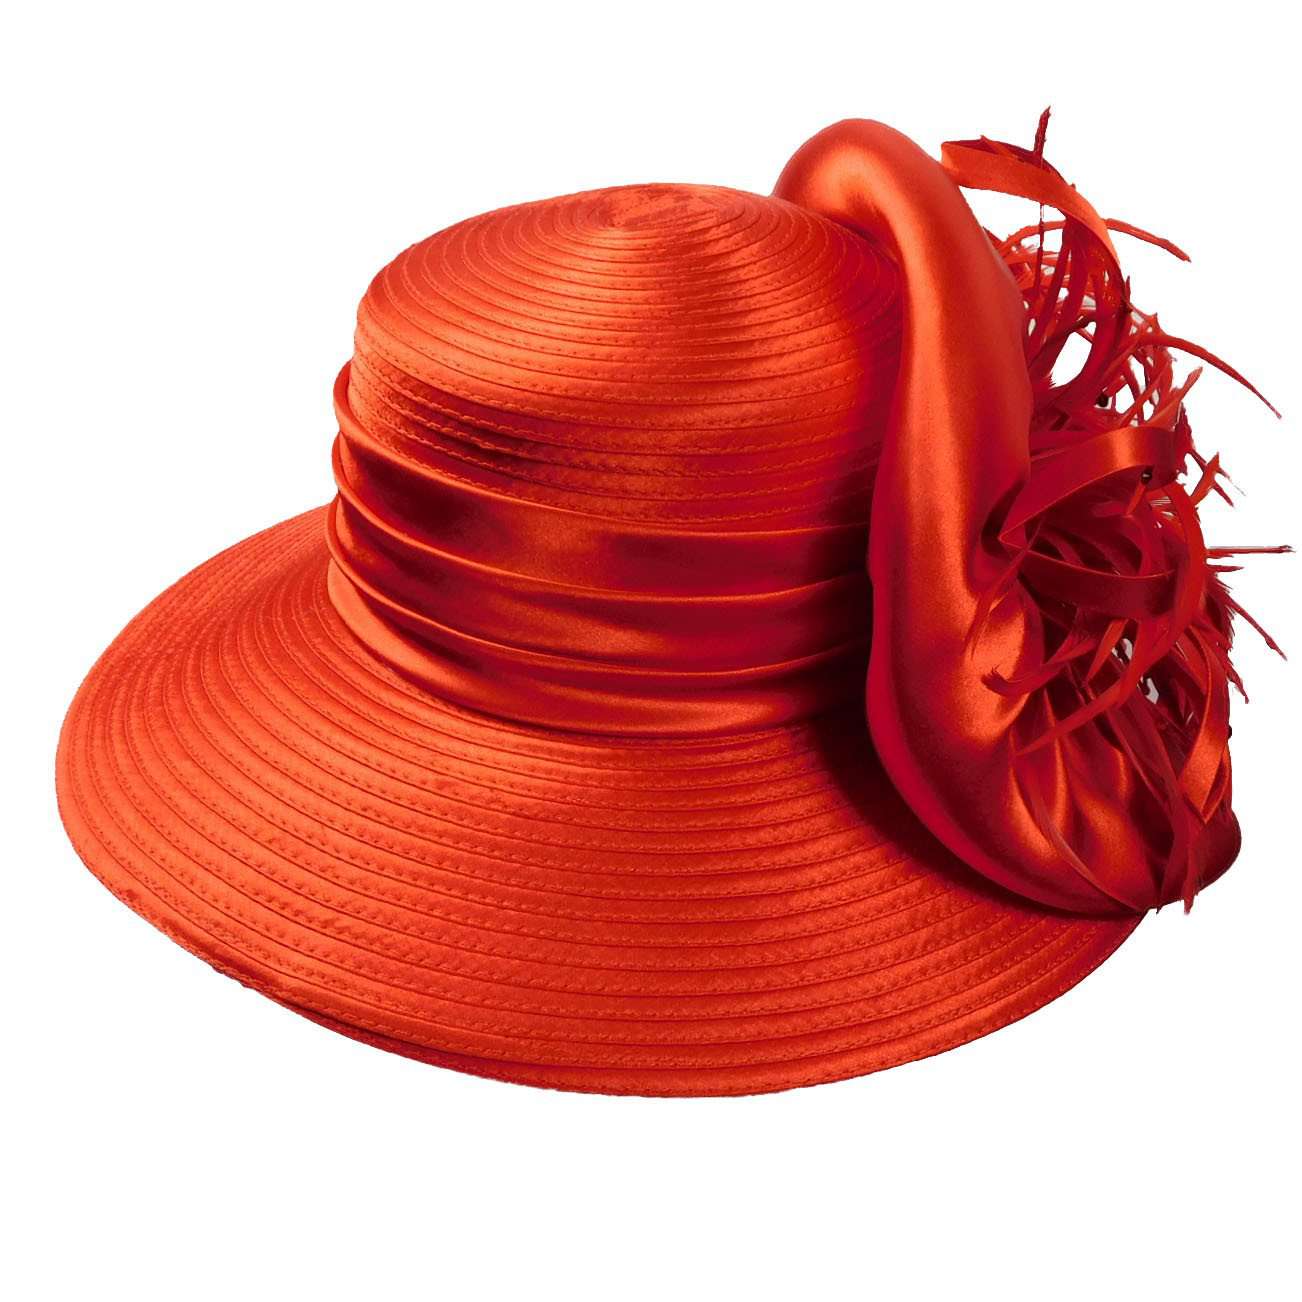 Satin Braid Dress Hat with Feather Burst - Kentucky Derby Hat Contest Winner, Dress Hat - SetarTrading Hats 